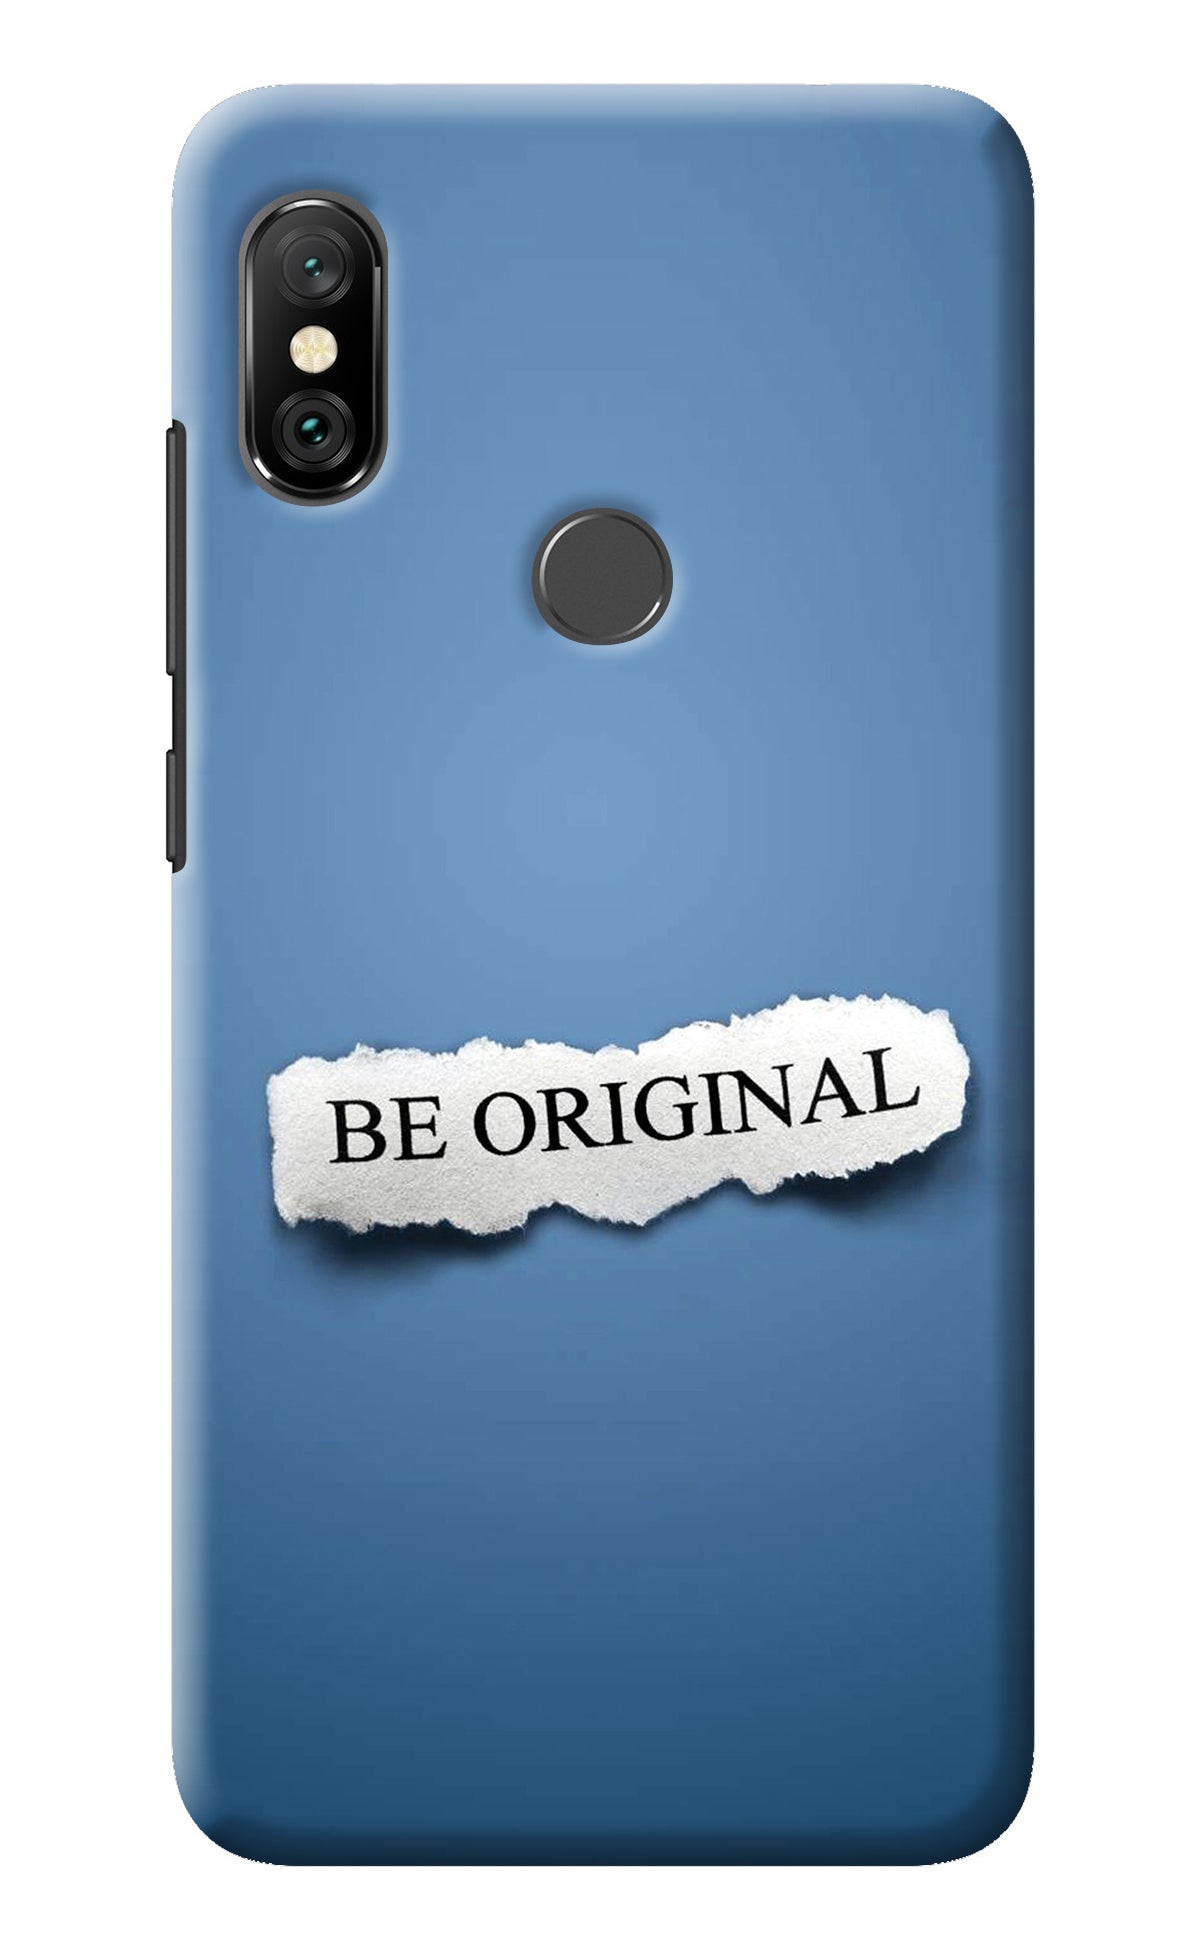 Be Original Redmi Note 6 Pro Back Cover